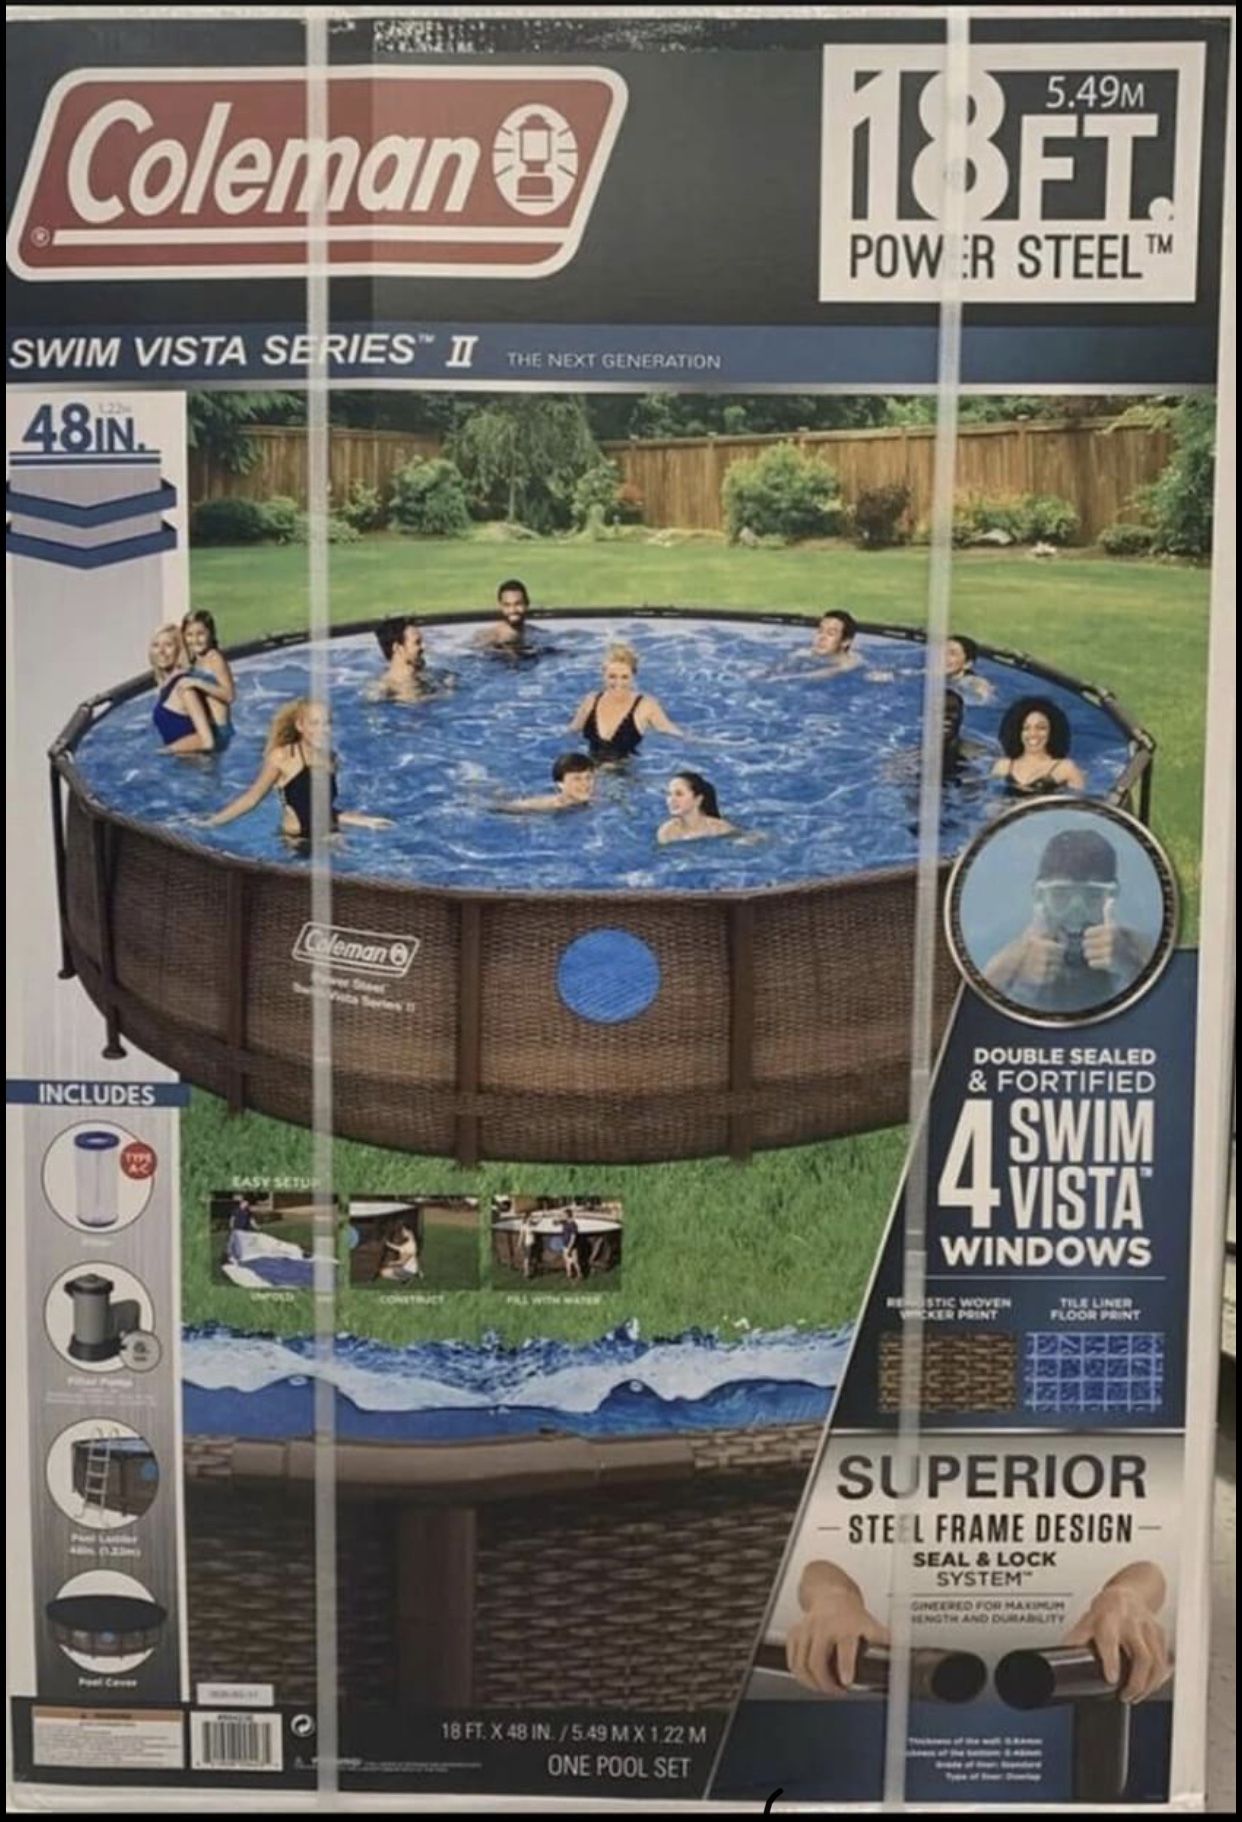 Brand new pool